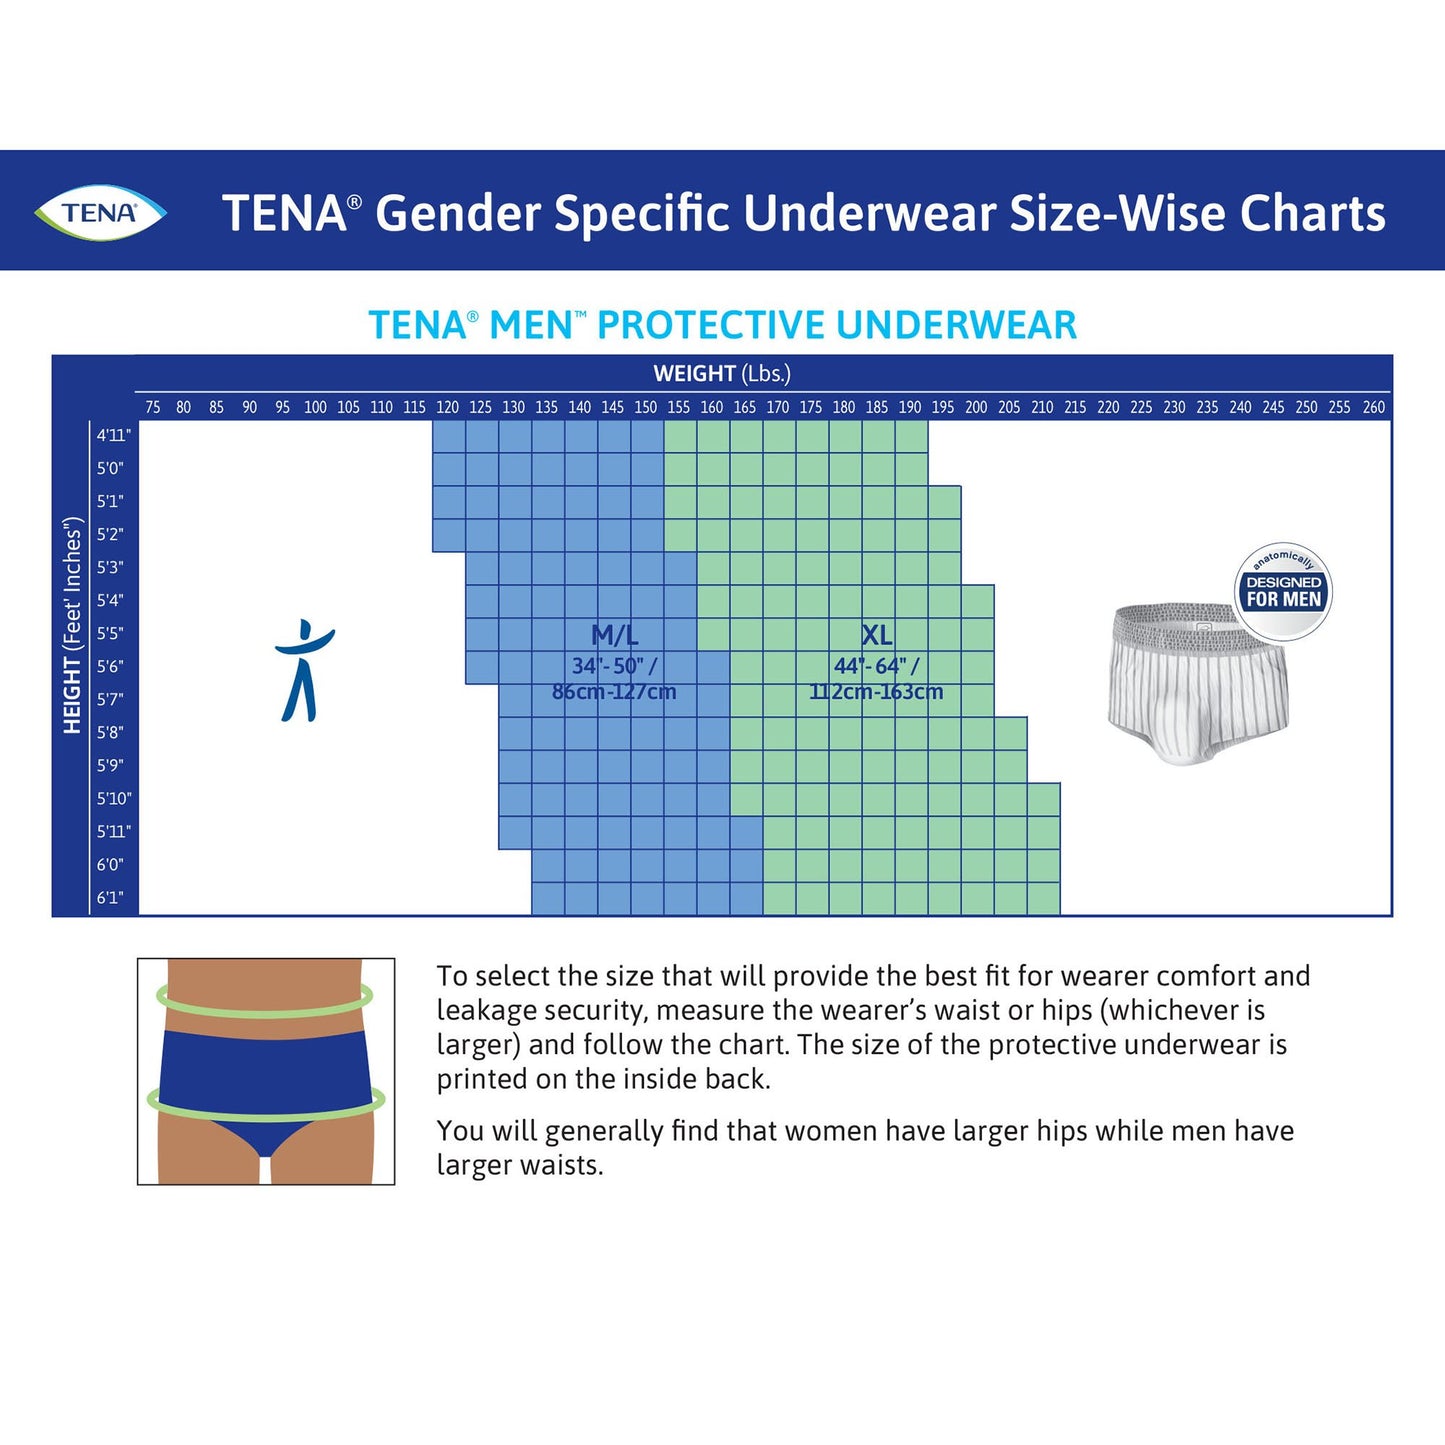 Tena® ProSkin™ Maximum Absorbent Underwear, Large